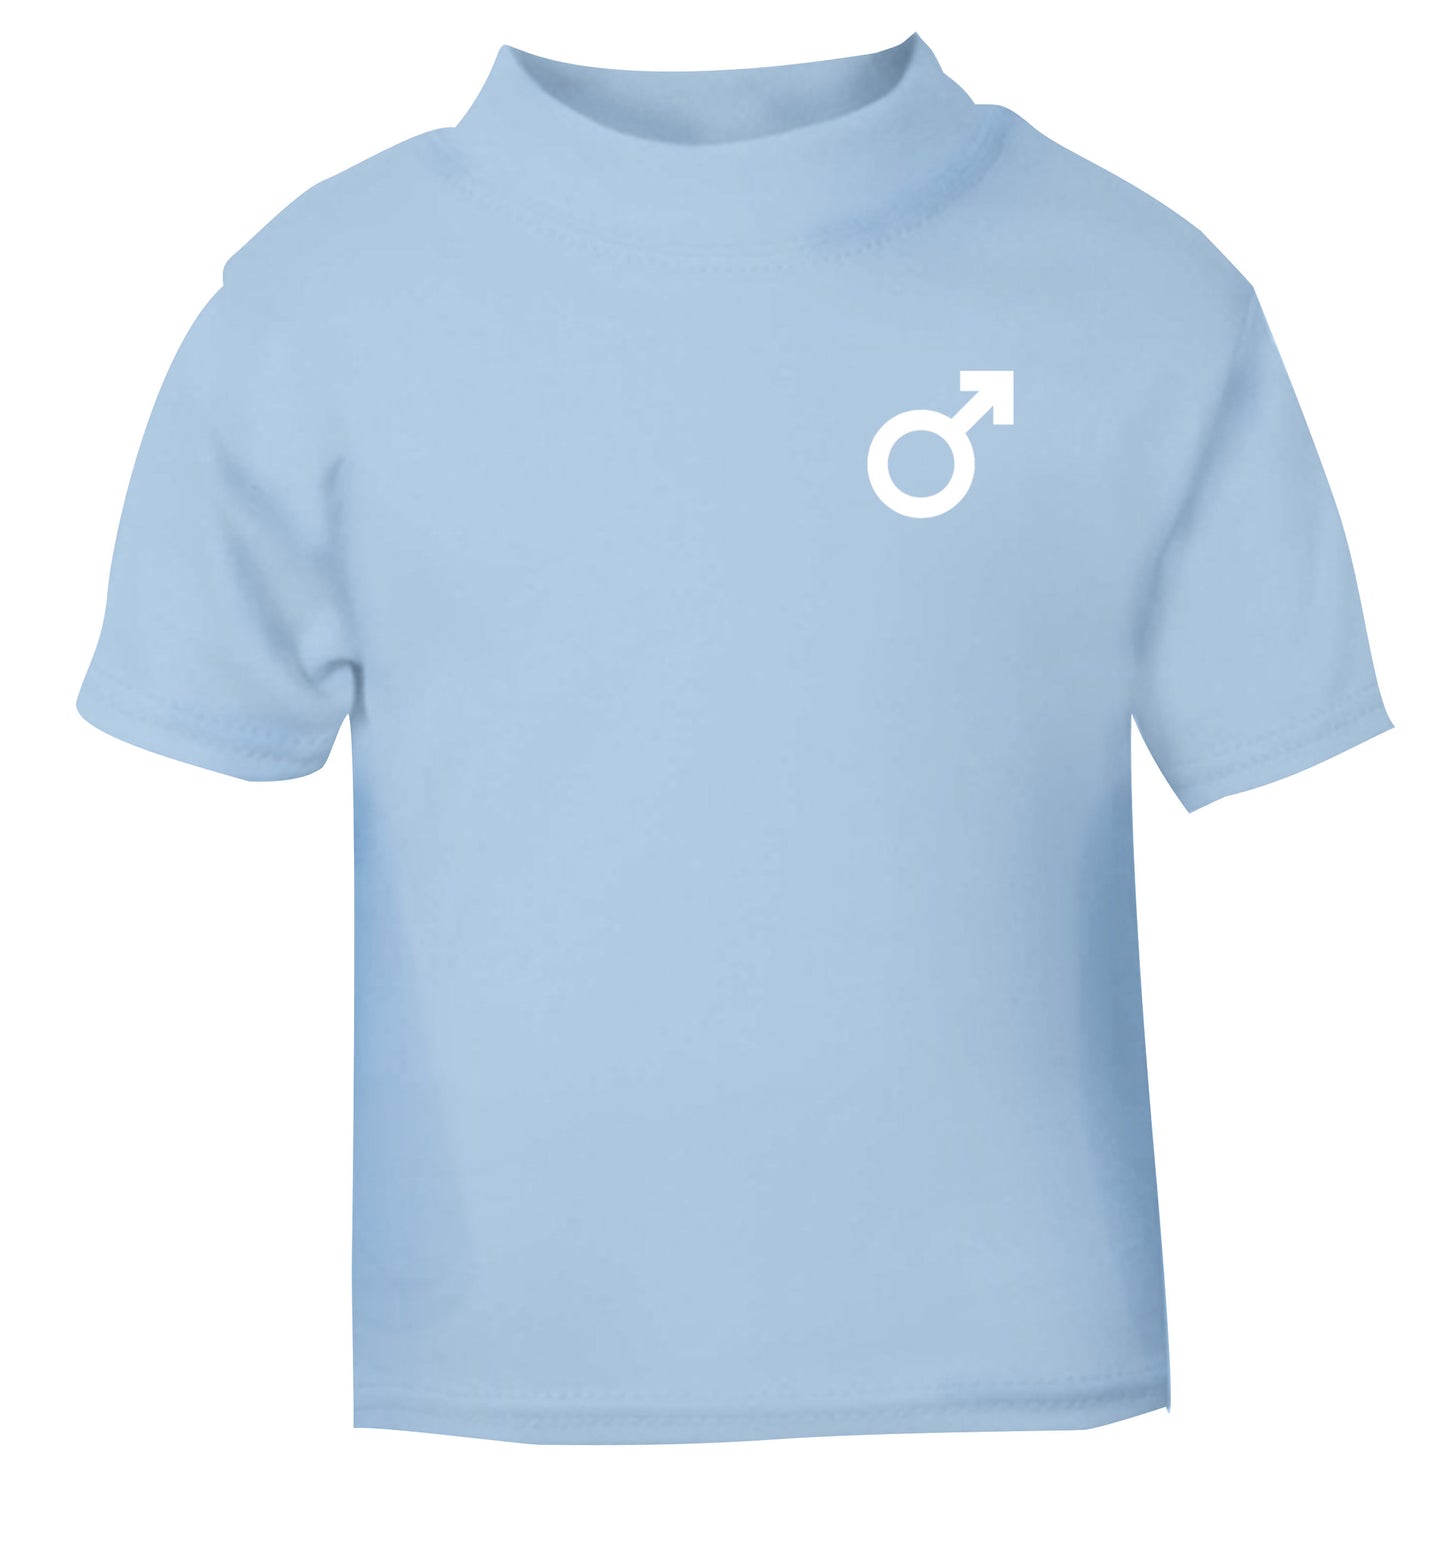 Male symbol pocket light blue Baby Toddler Tshirt 2 Years